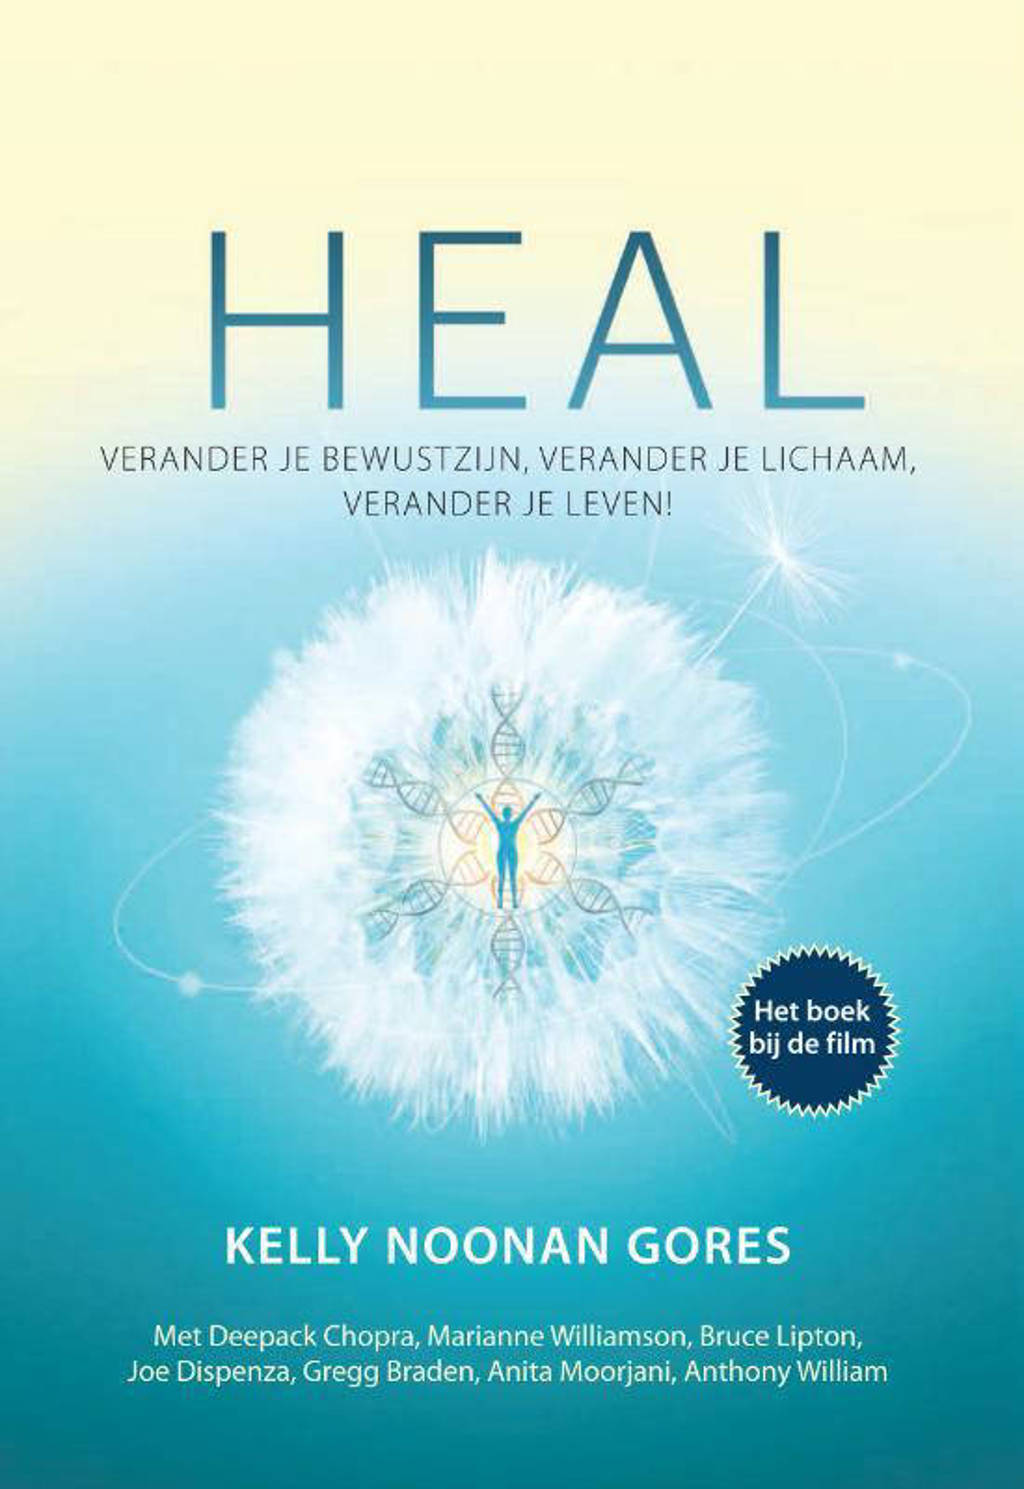 Heal - Kelly Noonan Gores